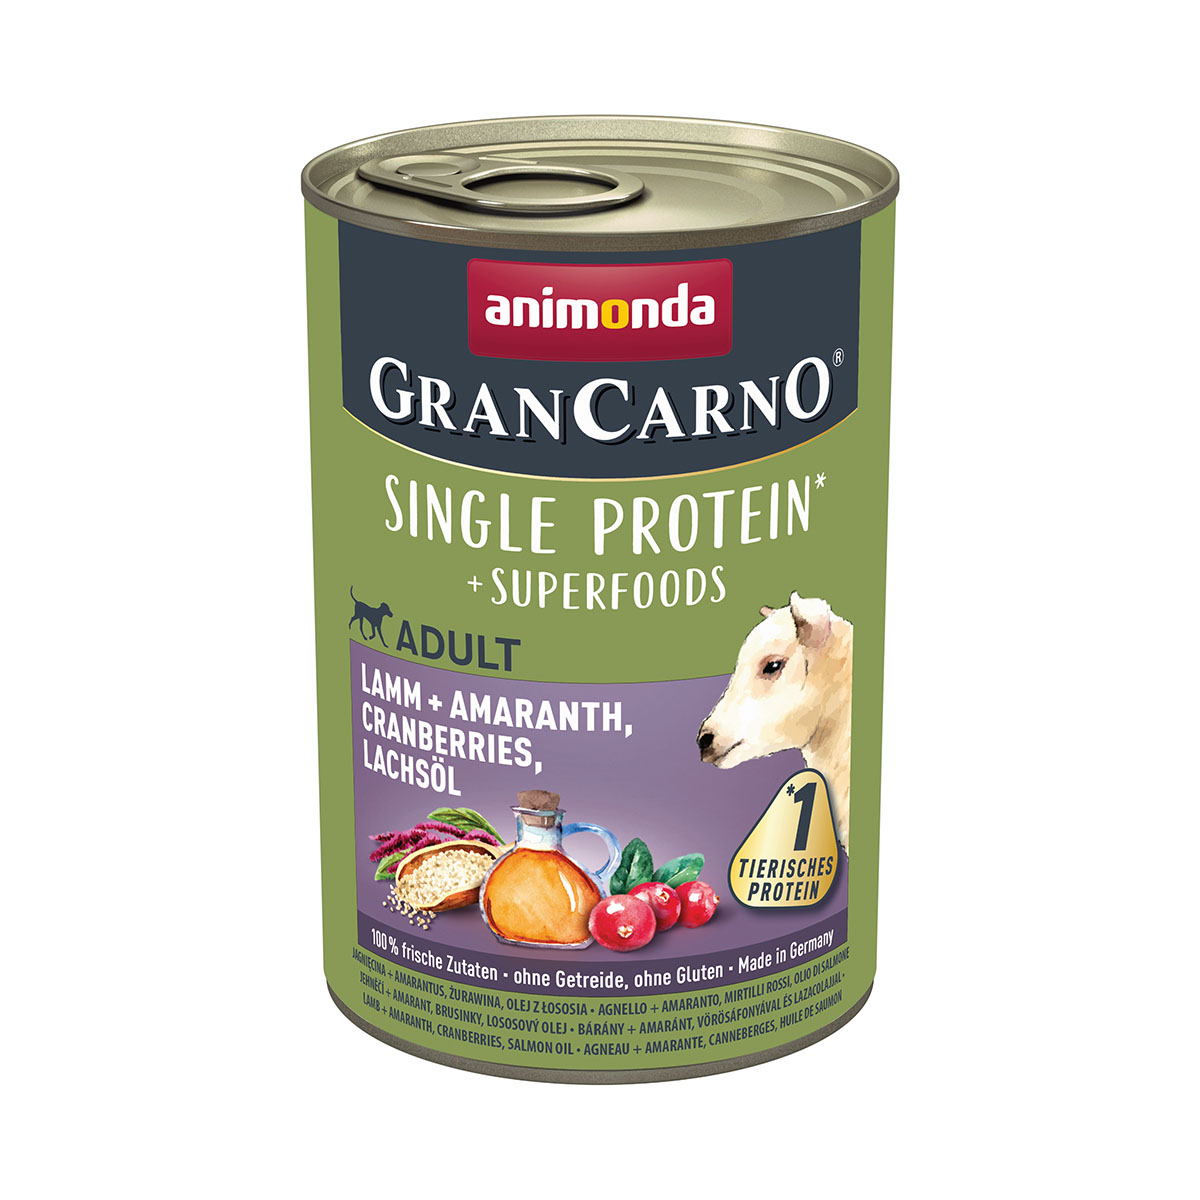 animonda GranCarno superfoods Lamm + Amarant + Cranberry + Lachsöl 6x400g von animonda GranCarno